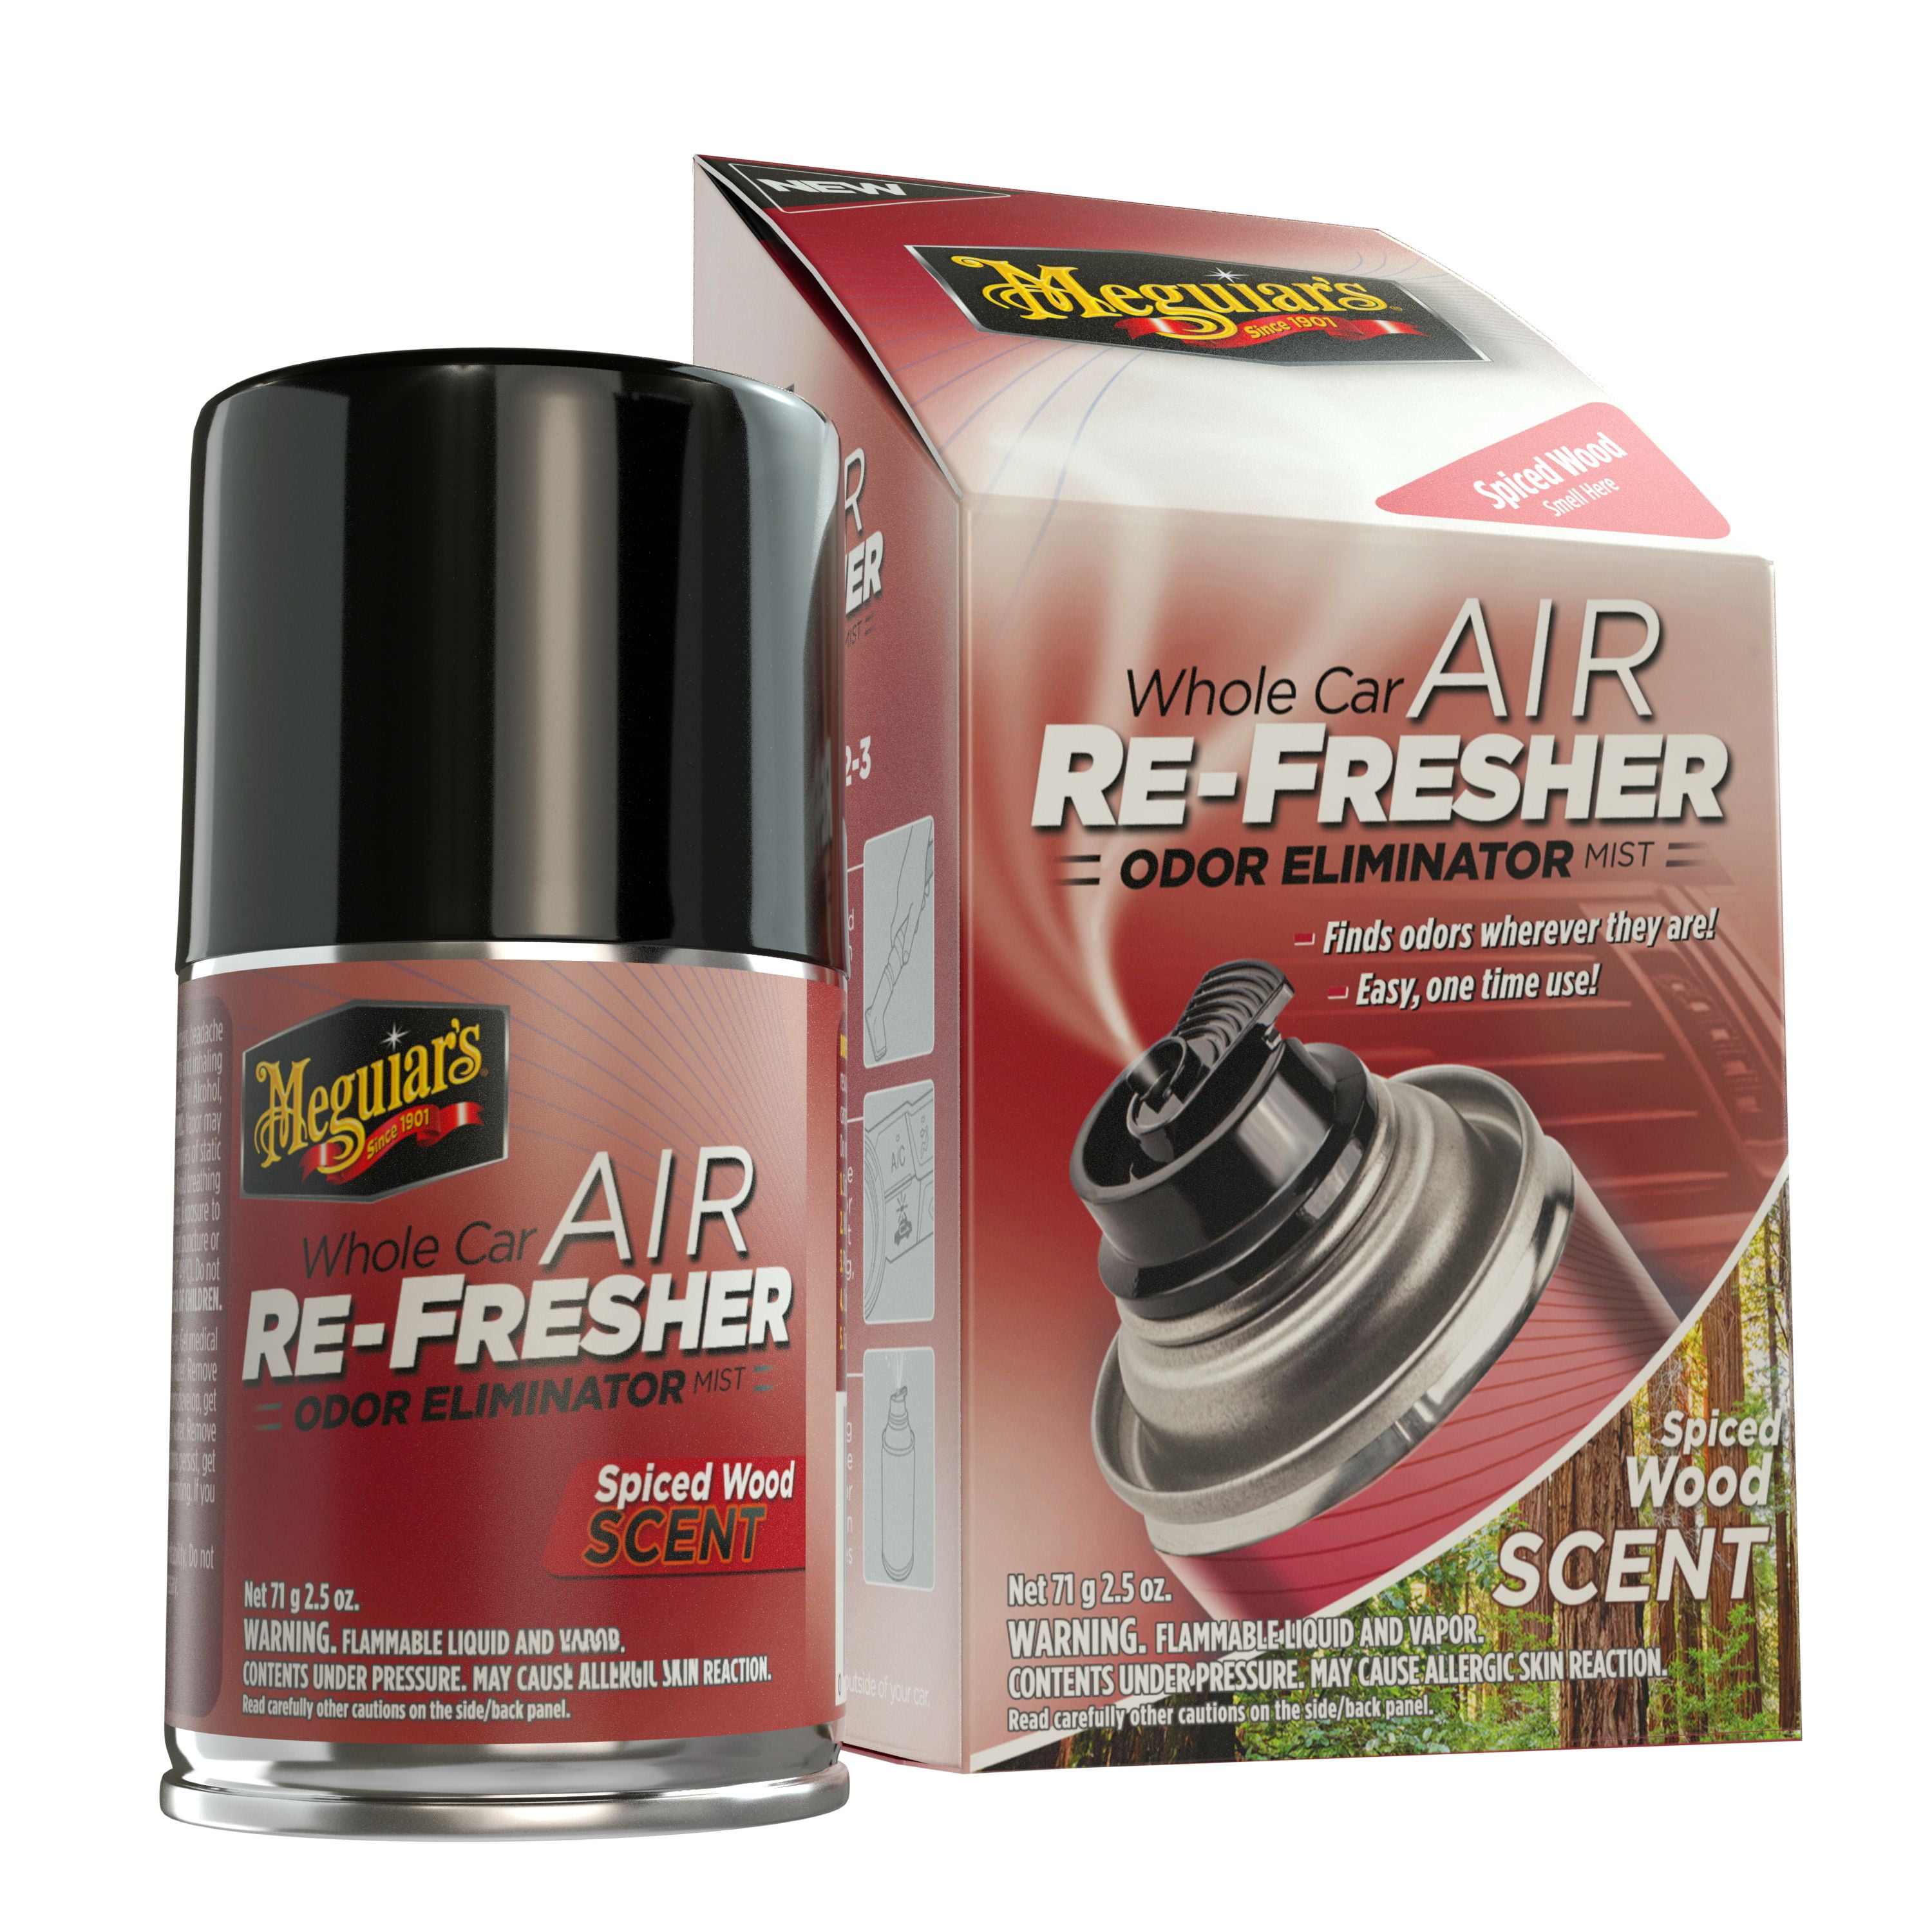 Meguiar's Whole Car Air Re-Fresher Odor Eliminator - Spiced Wood Scent,  G19702, 2.5 Oz